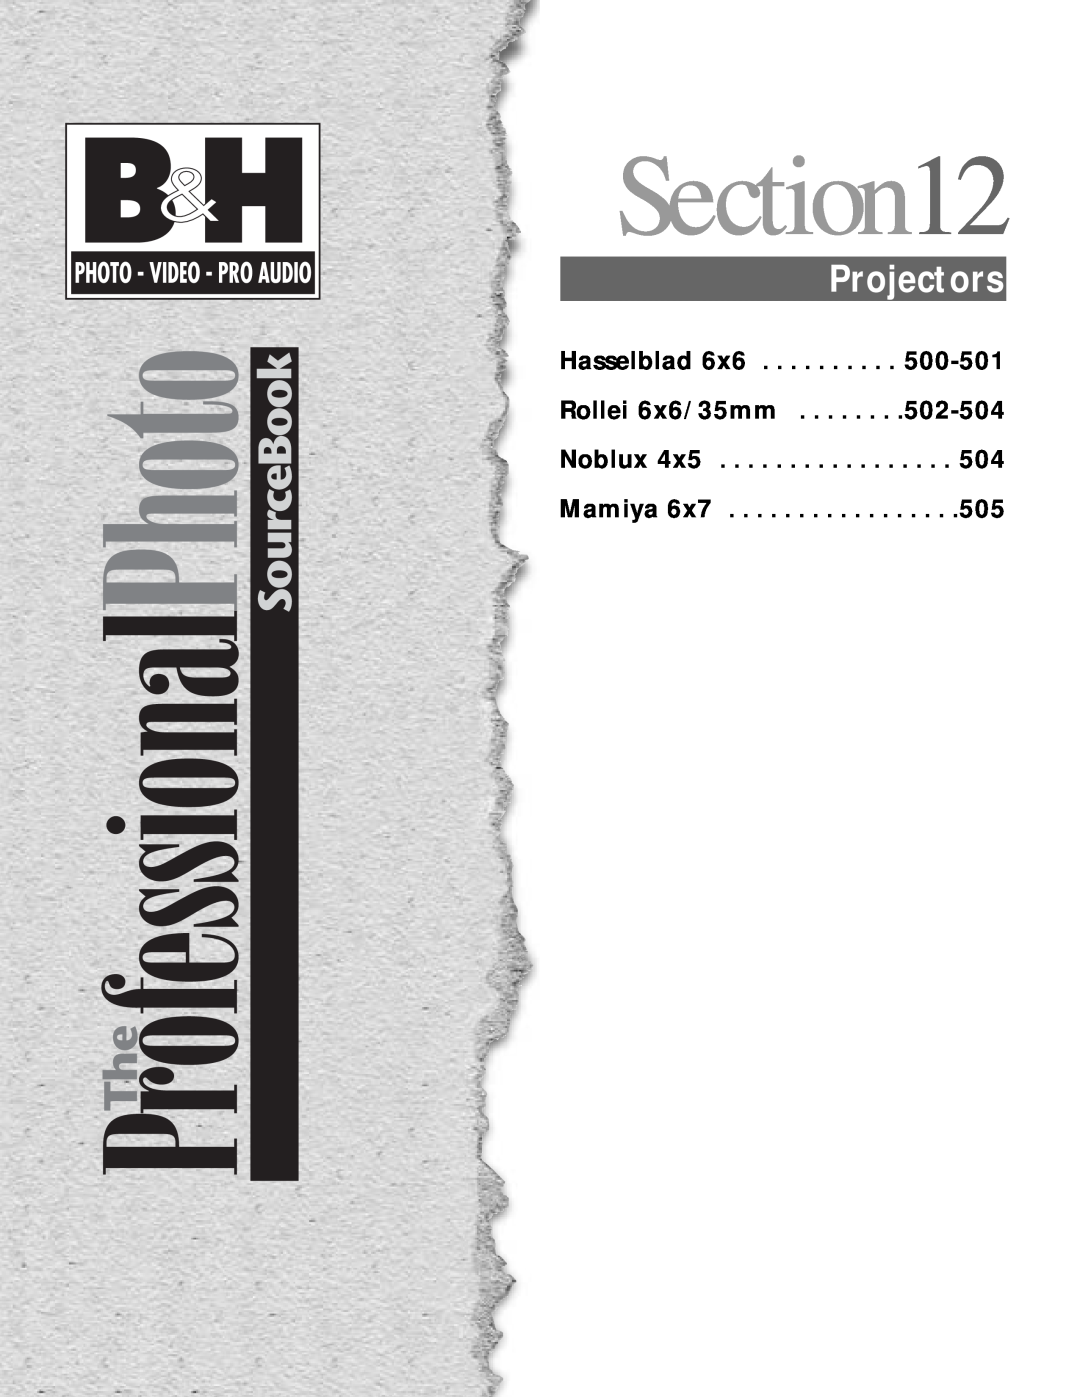 Hasselblad PCP 80 manual Projectors, Hasselblad 6x6 Rollei 6x6/35mm, Noblux, Mamiya 6x7 